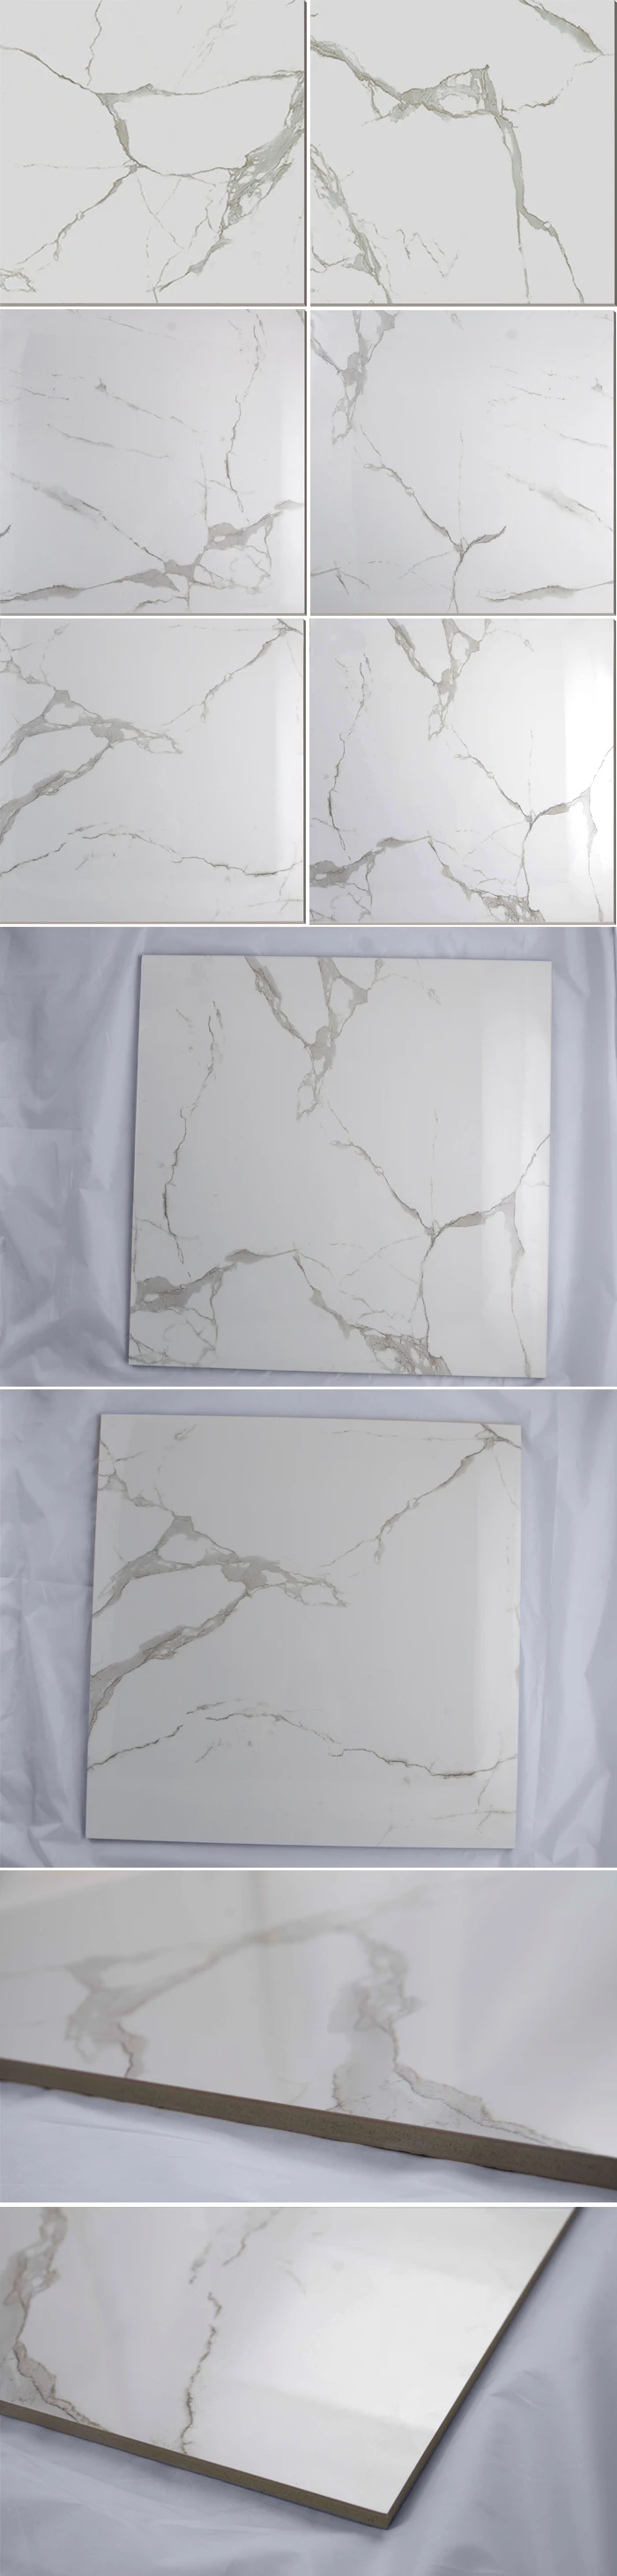 Hb6452 Polished Porcelain 600x600 White Carrara Marble Tile - Buy